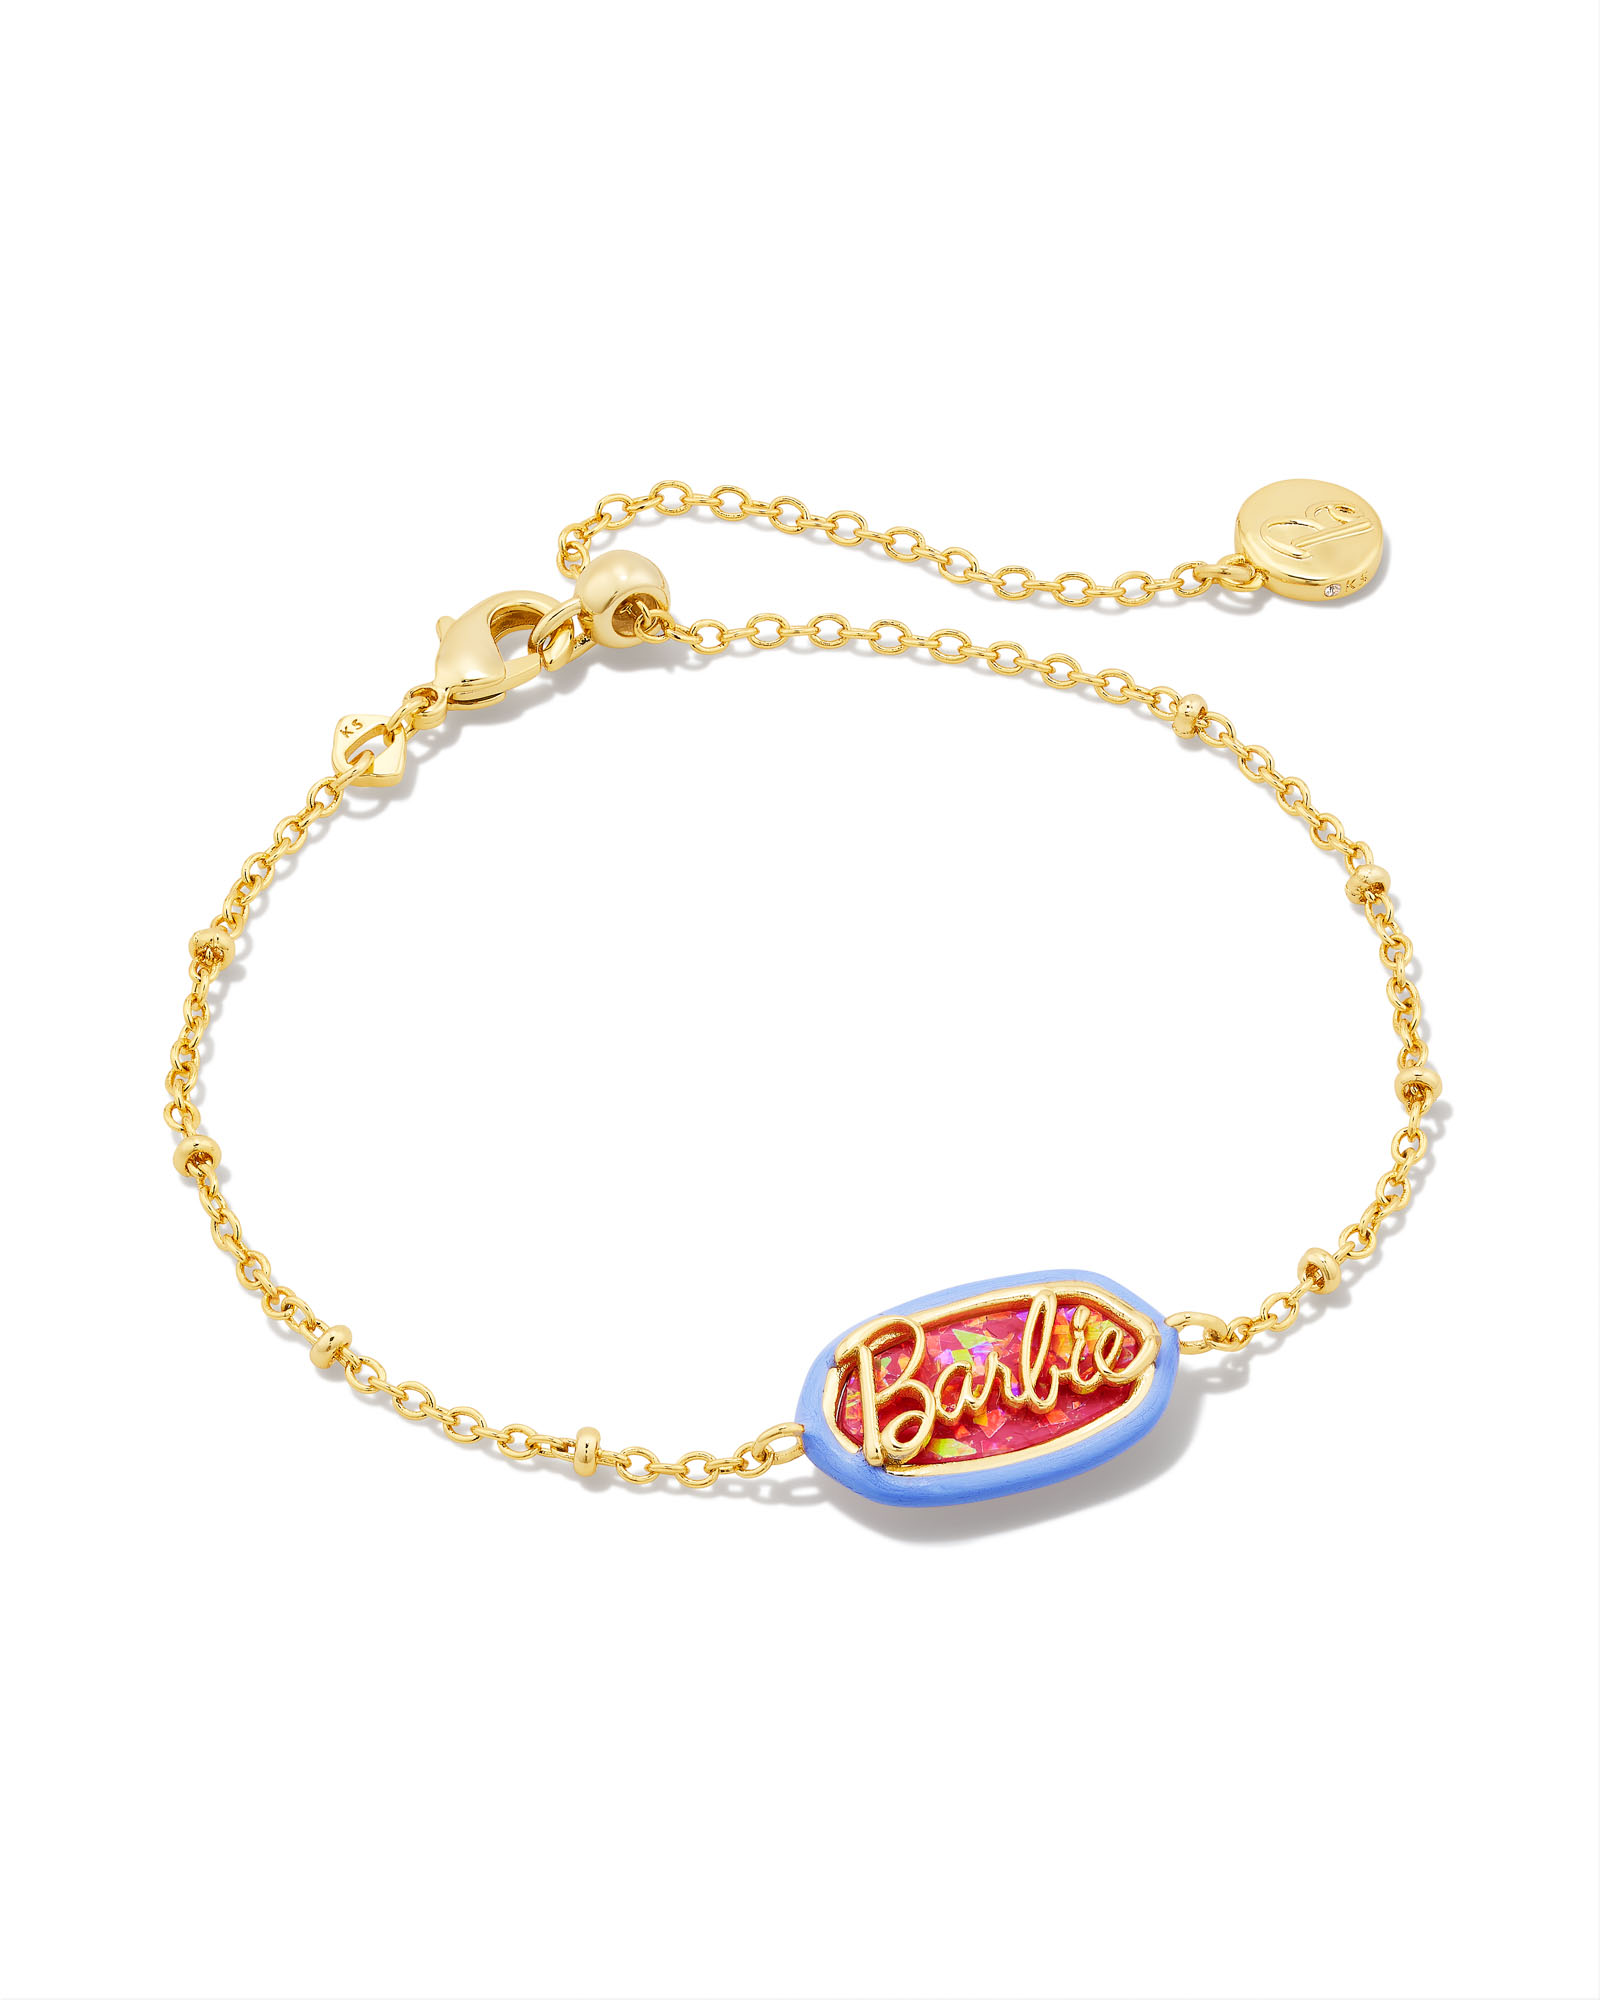 Elaina Gold Adjustable Bracelet in Garnet | Kendra Scott